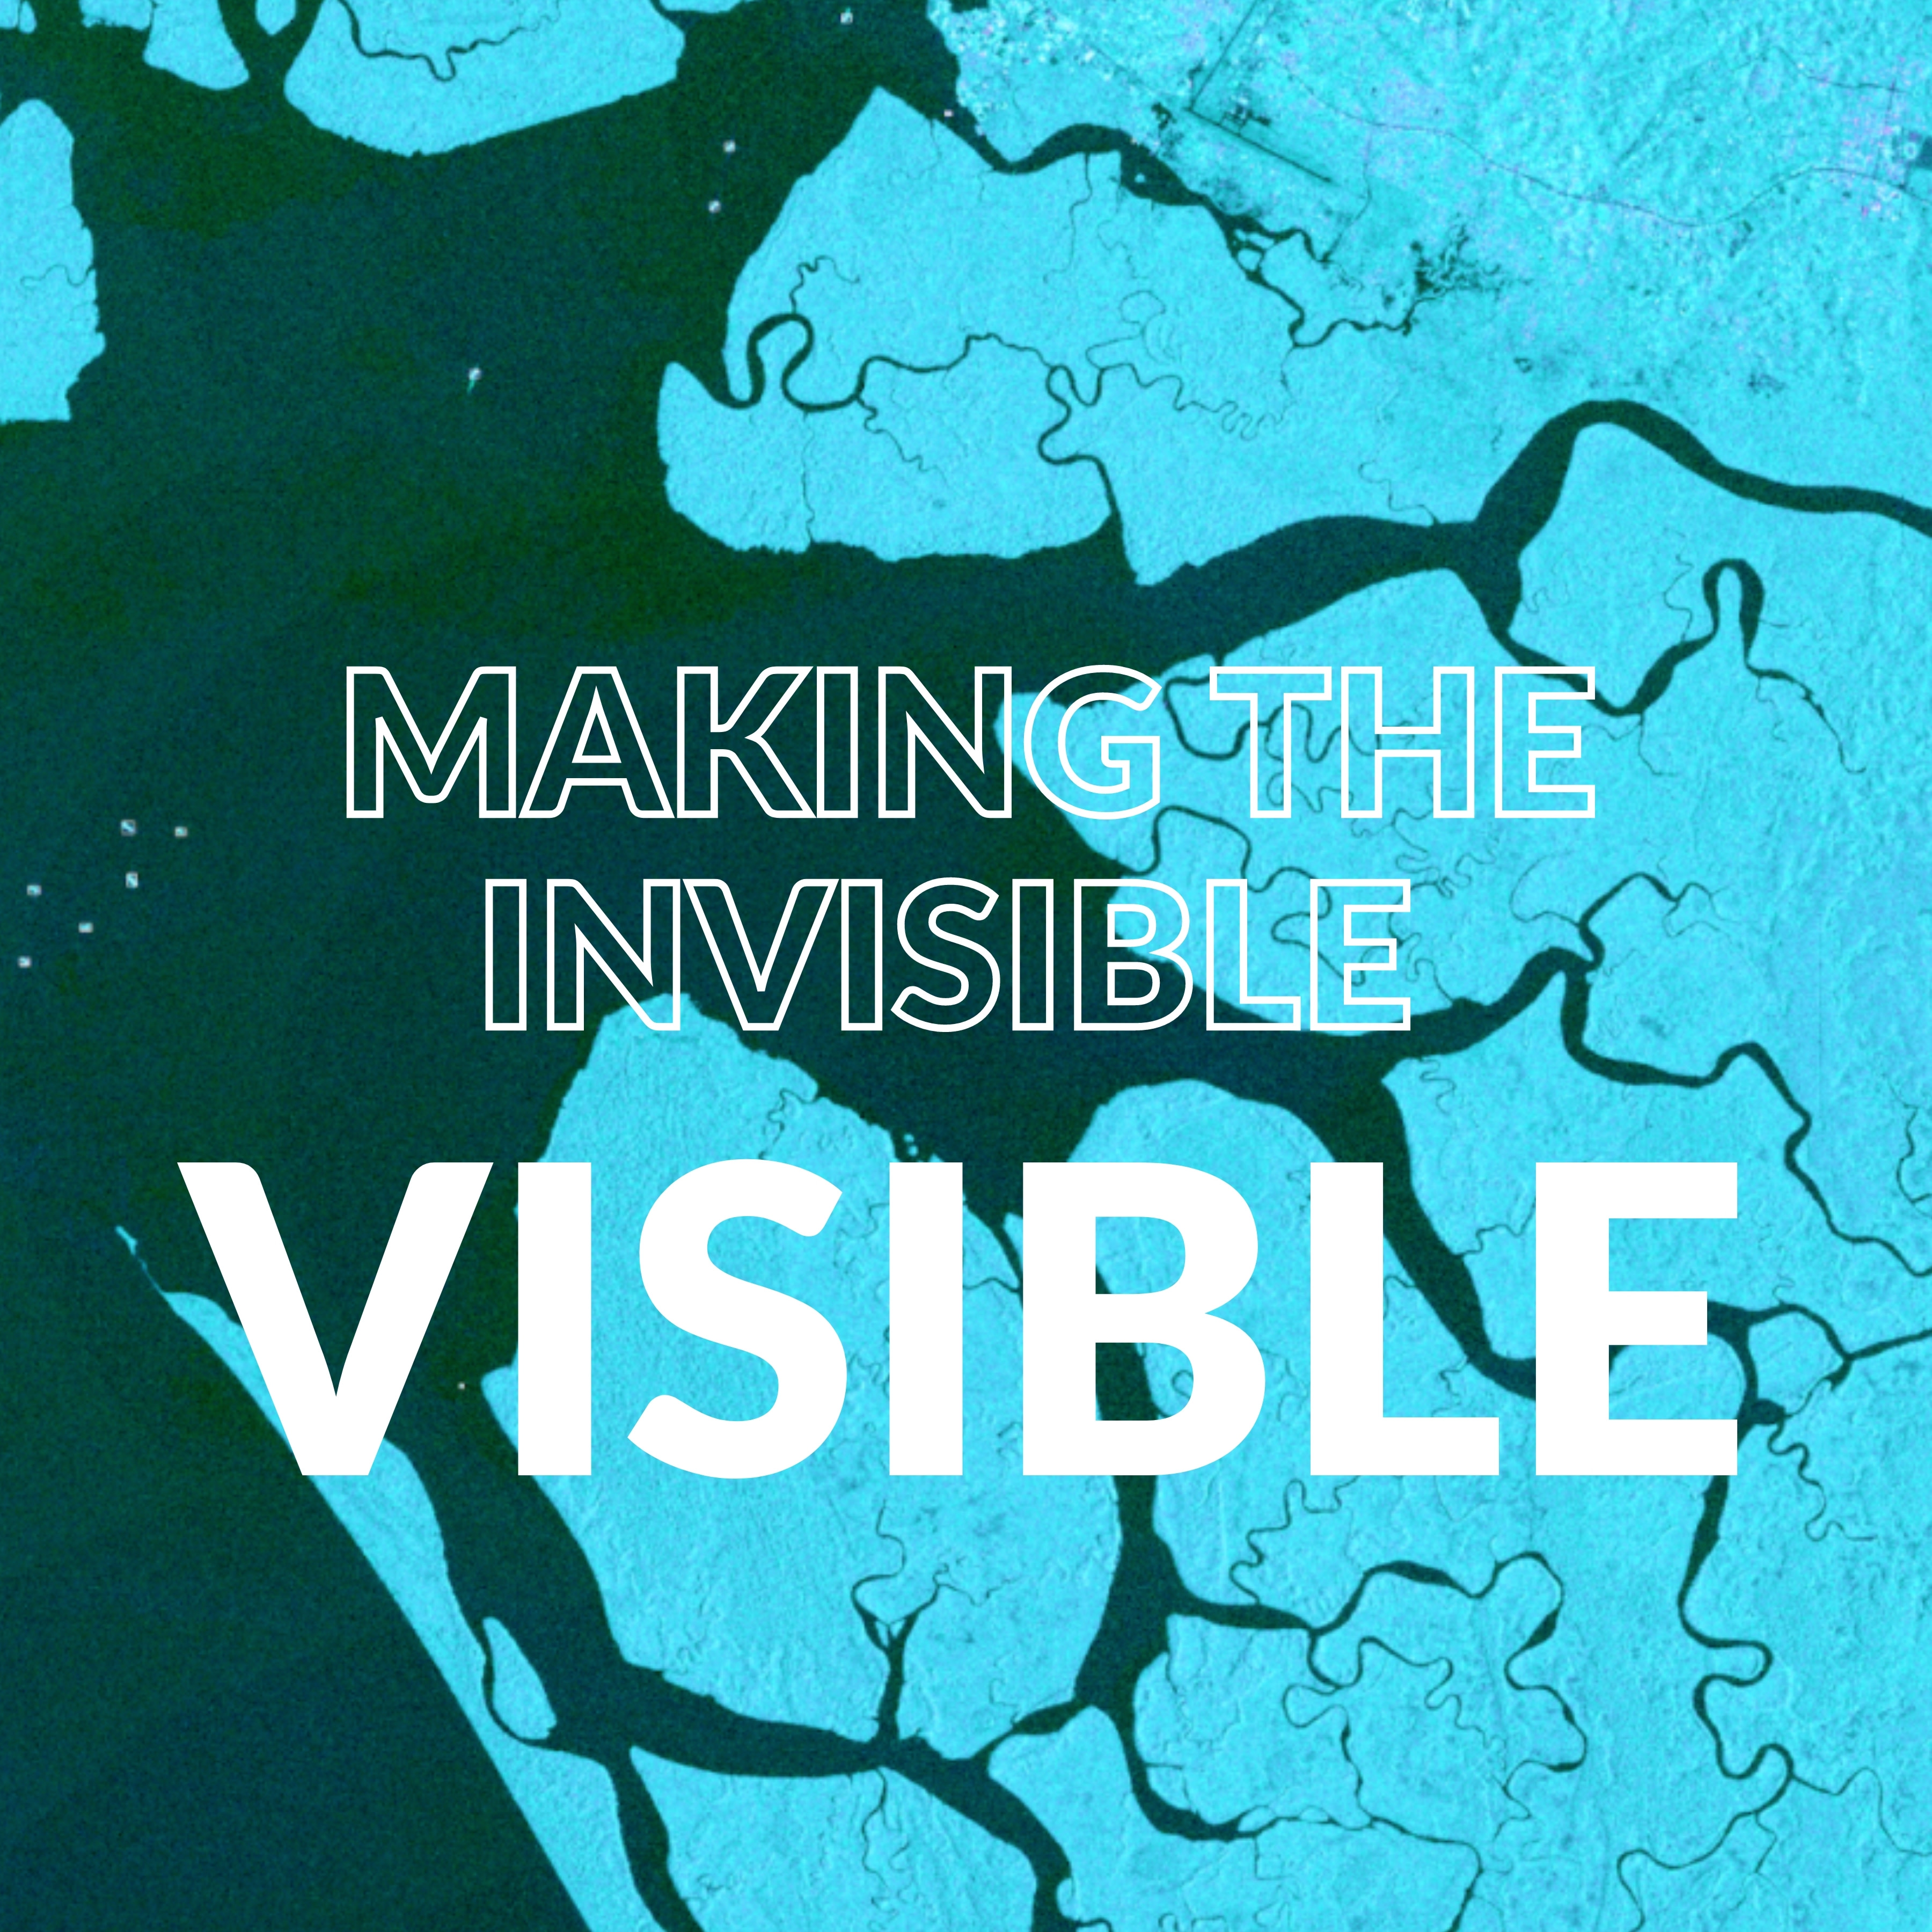 Making Invisible VISIBLE